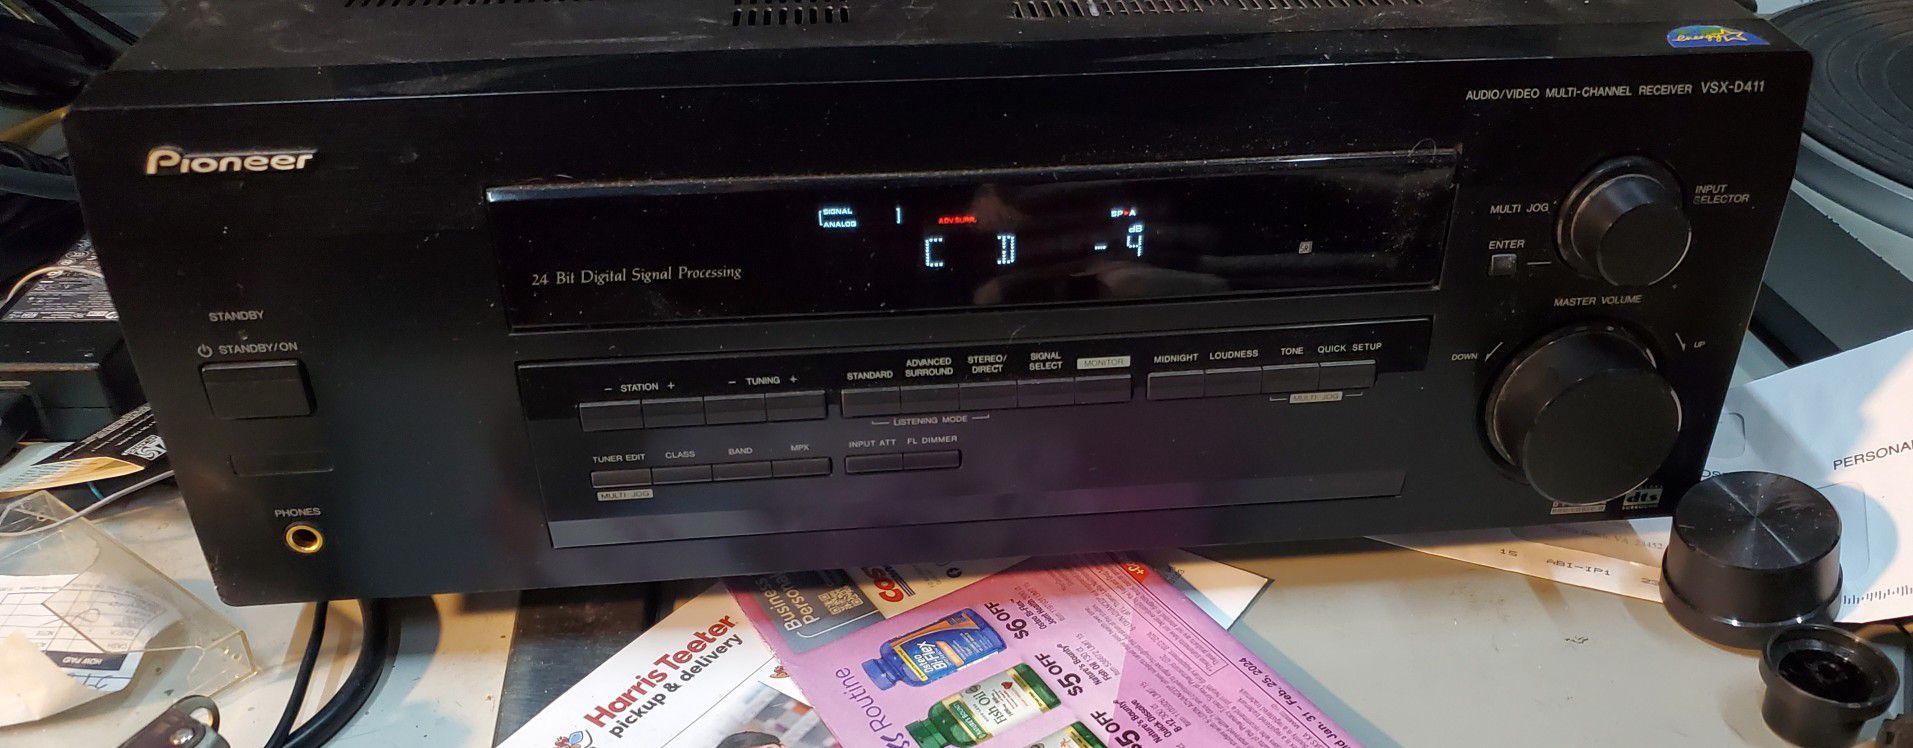 Pioneer VSX-D411 Dolby Digital 5.1 DTS Prologic II AV Receiver Watch Video Demo